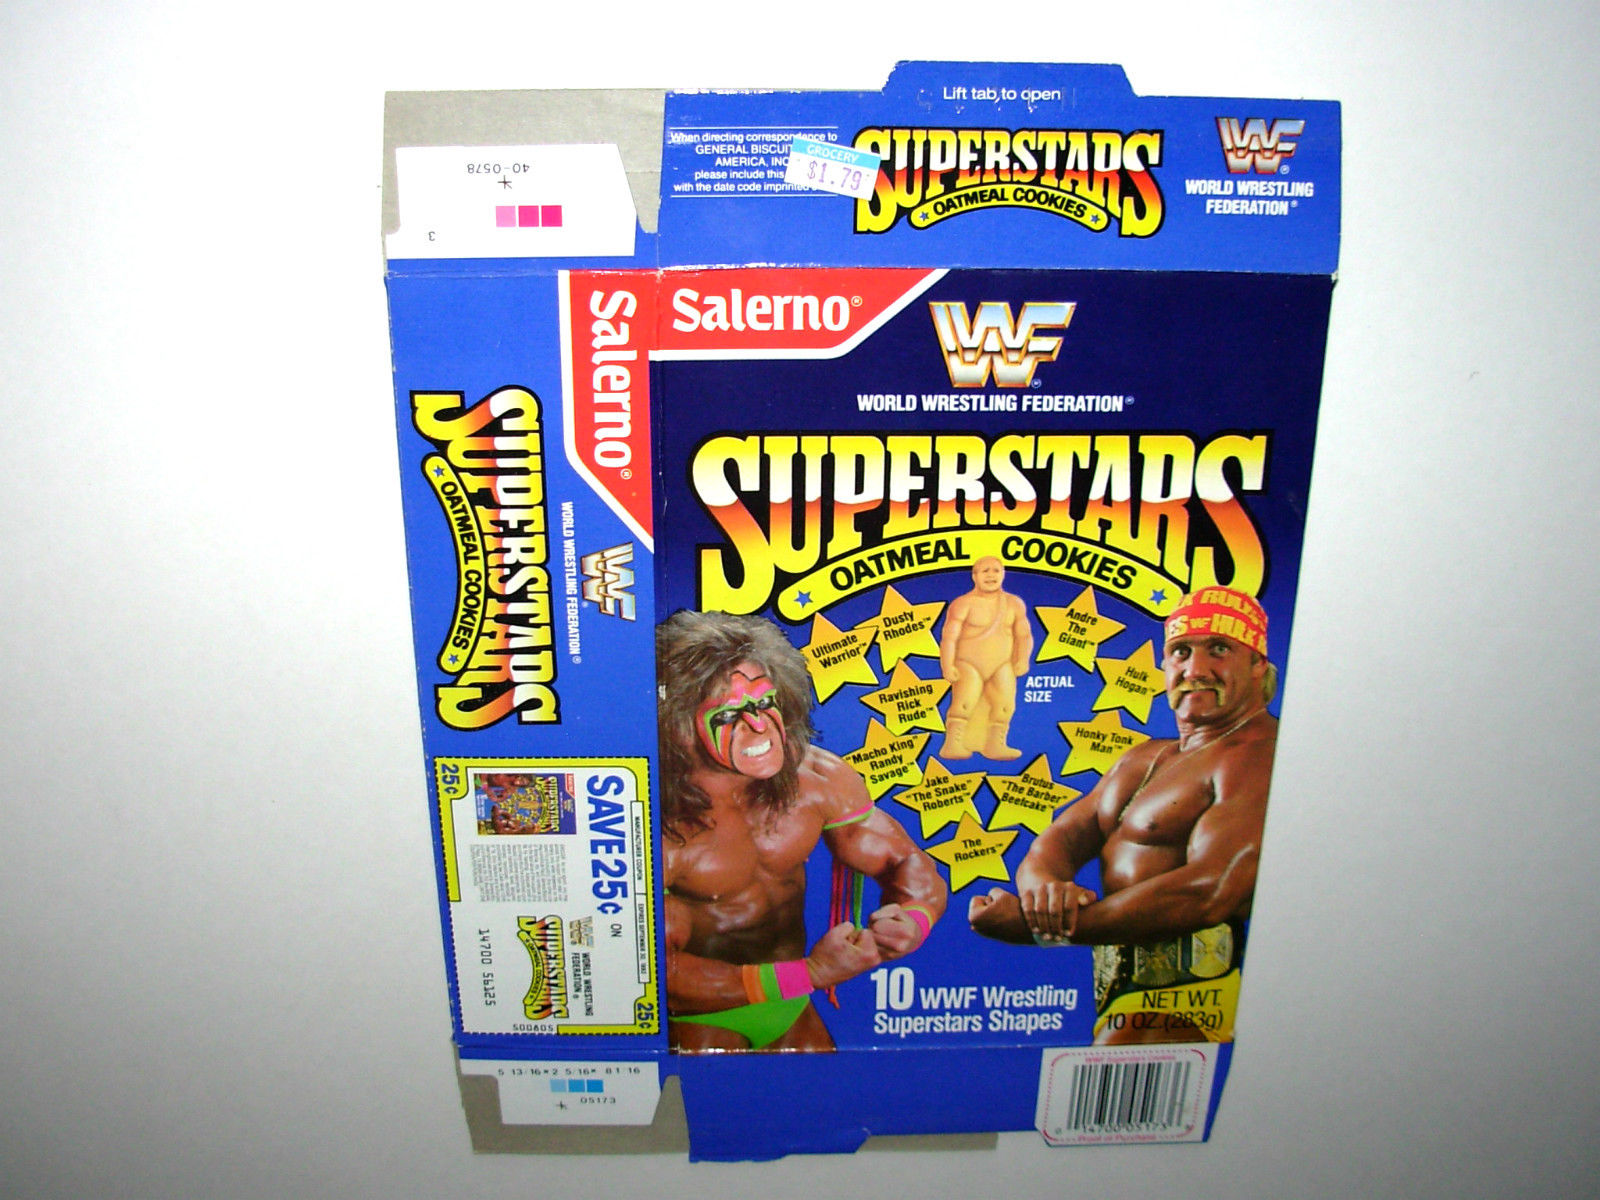 WWF Superstars Oatmeal Cookies box Ultimate Warrior Hulk Hogan